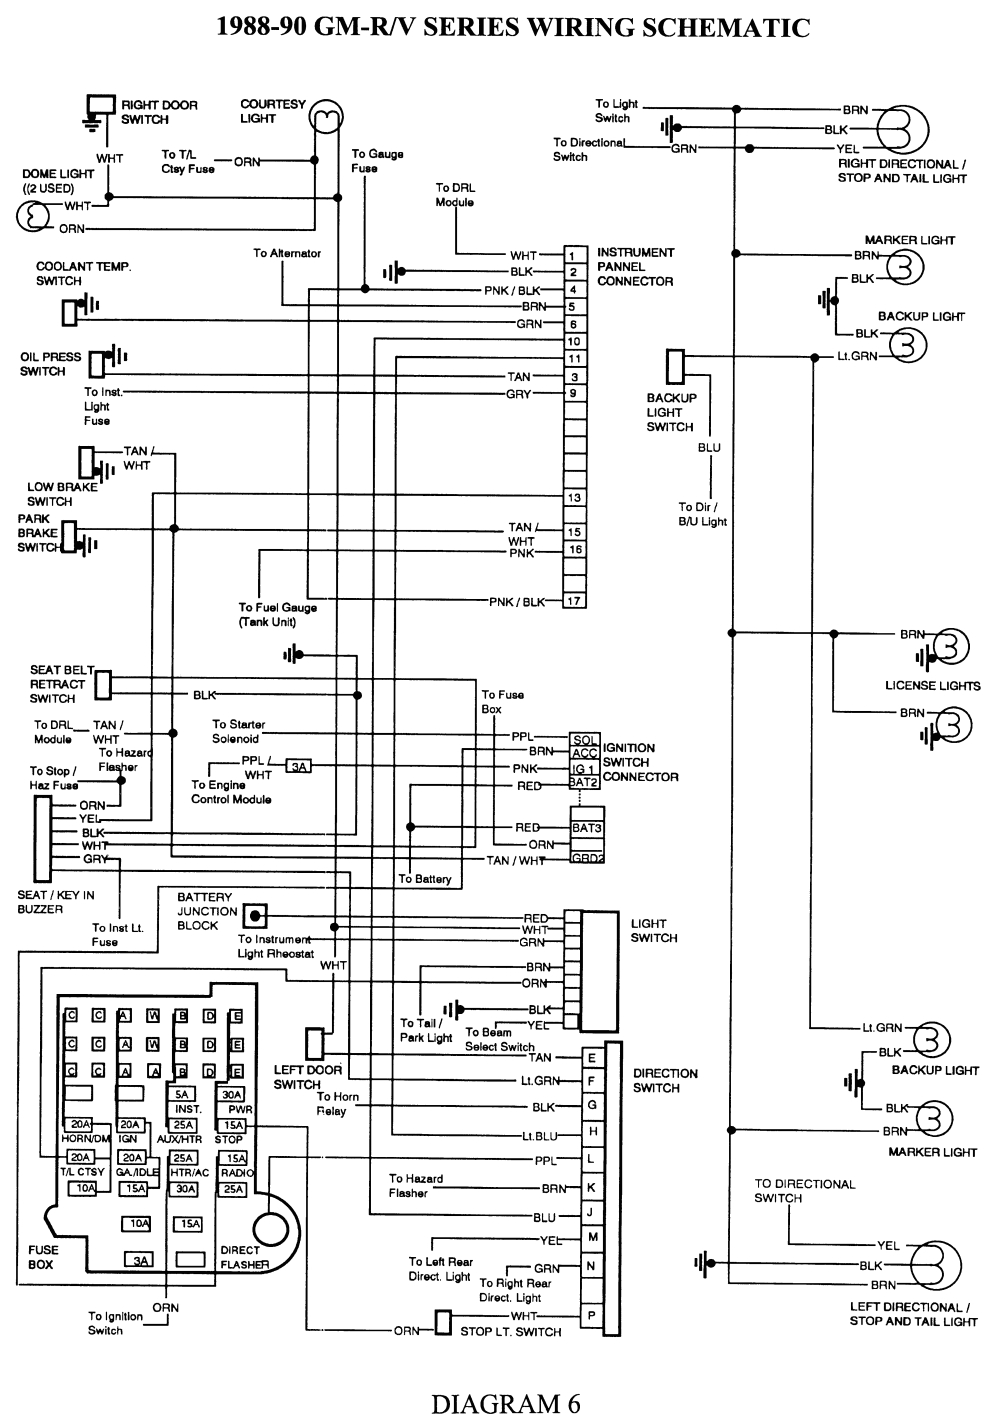 repair guides wiring diagrams wiring diagrams autozone com 98 gm truck wiring diagrams